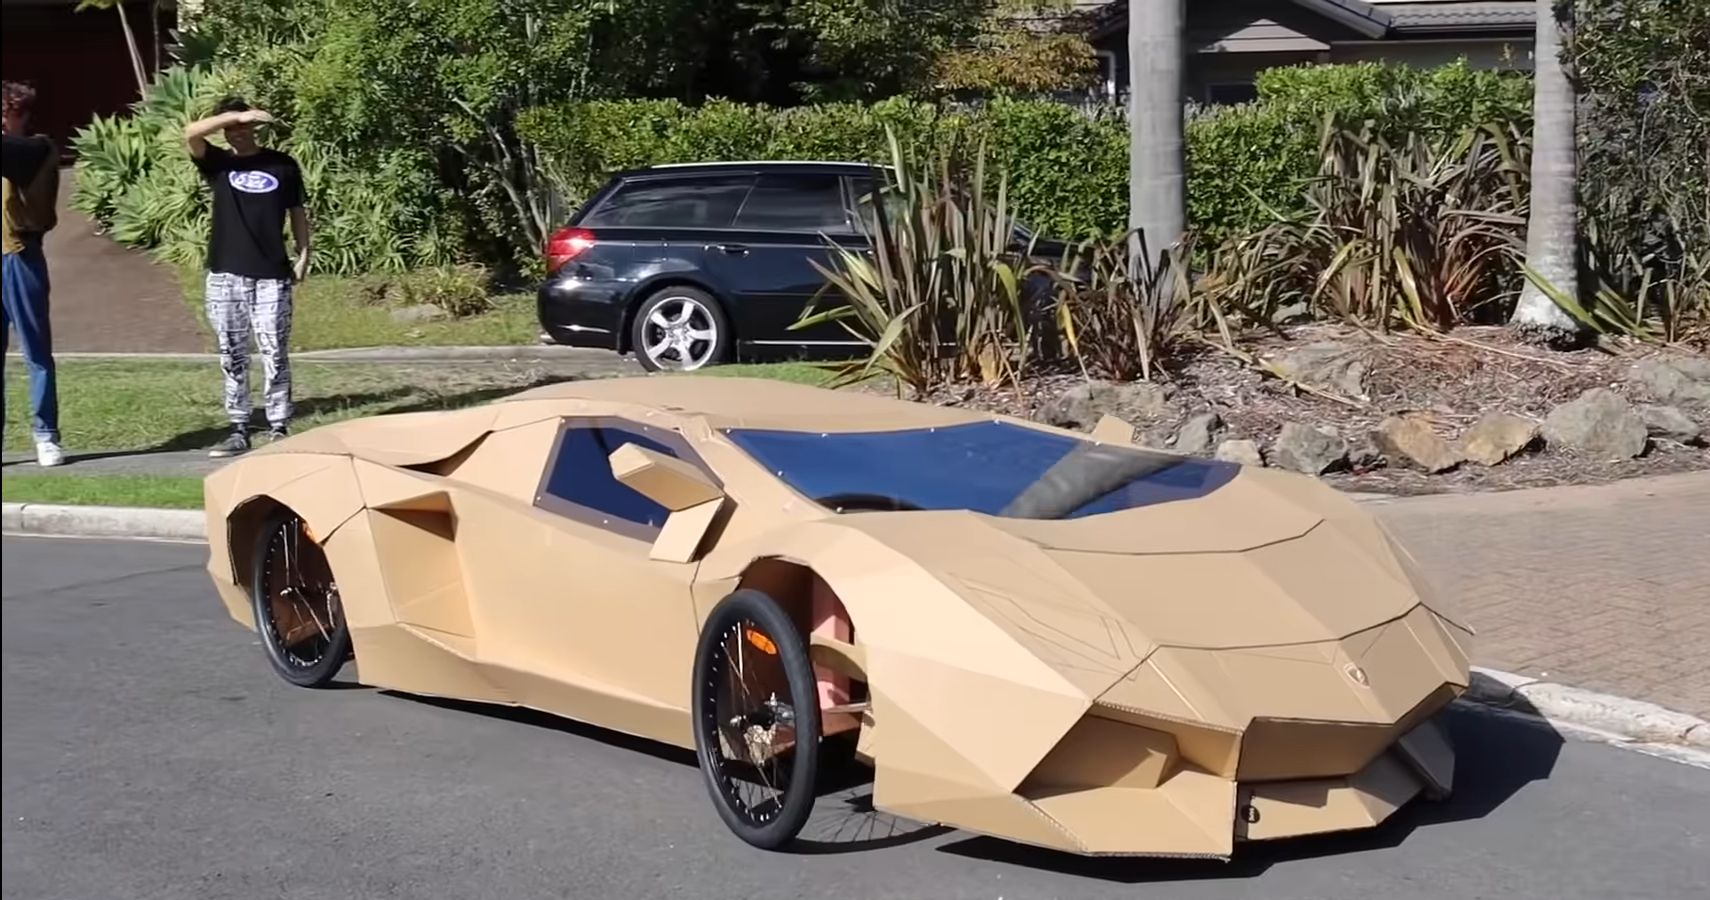 Drivable Lamborghini Replica Made From Cardboard Sells For $10K | Flipboard